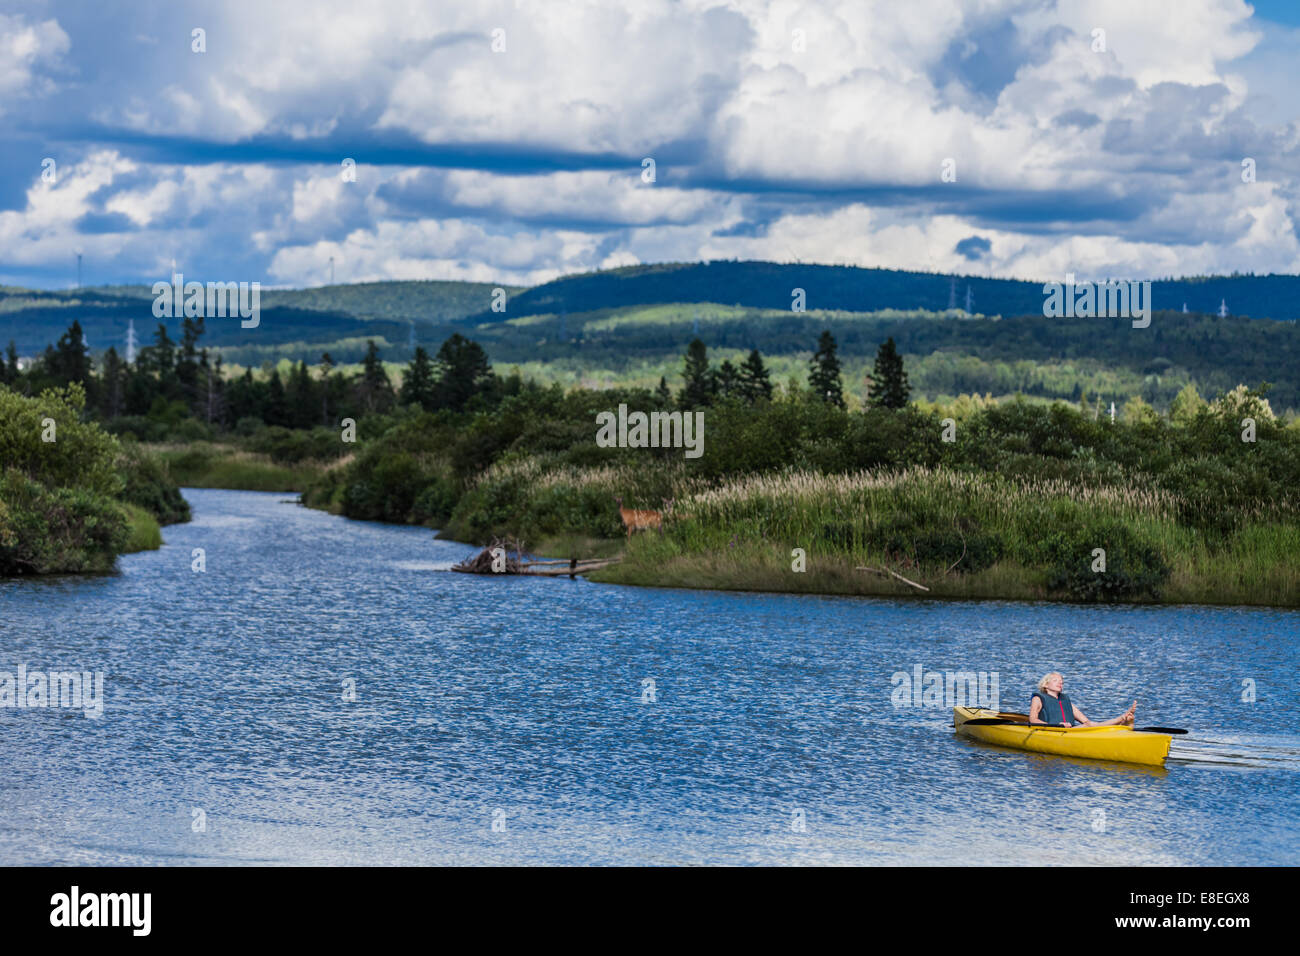 Fiume calmo e rilassante donna in un kayak giallo Foto Stock